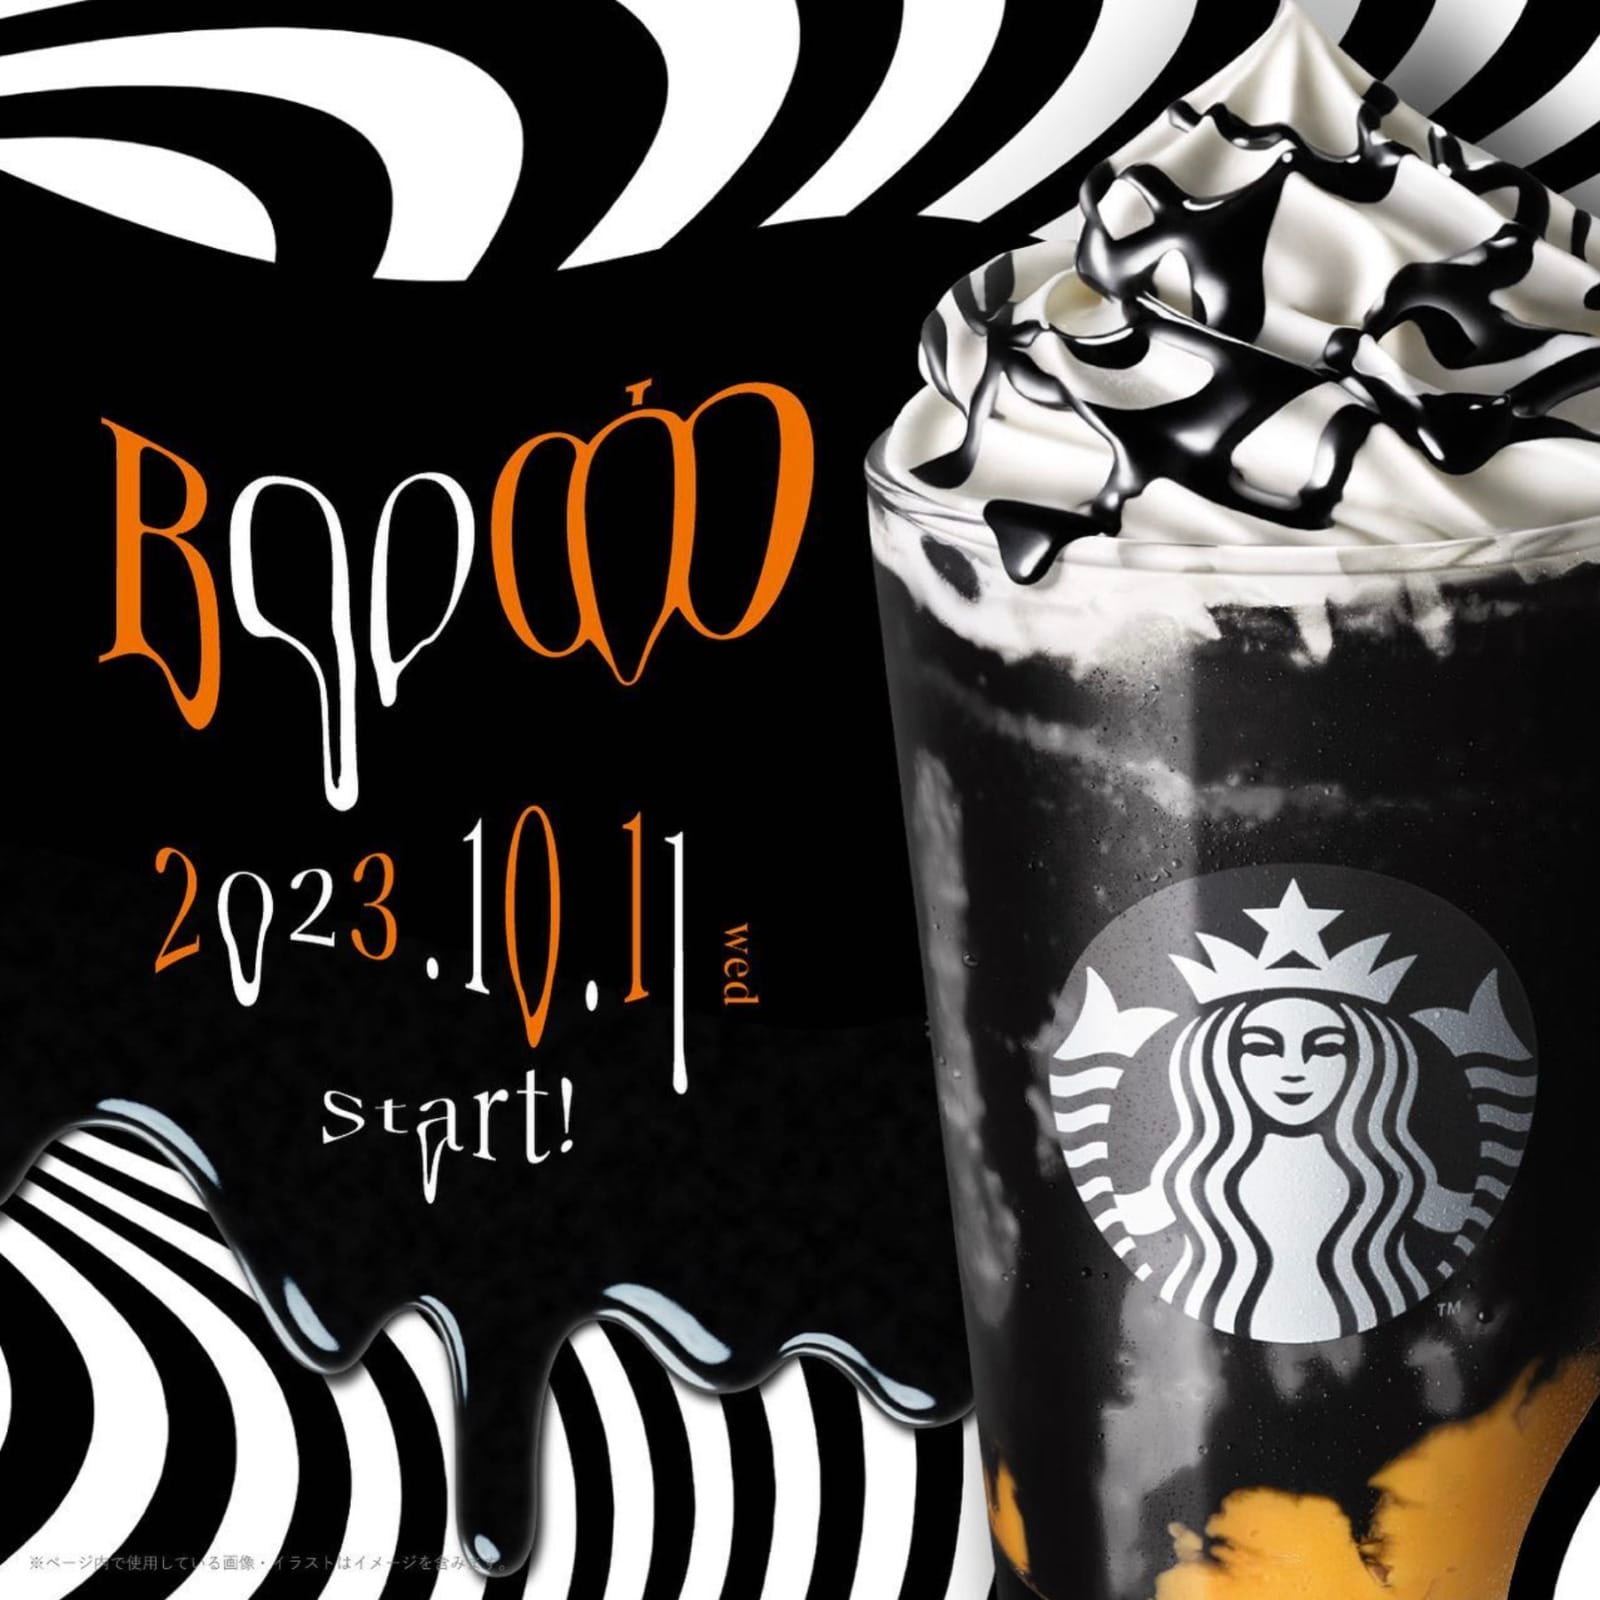 Booooo Frappuccino Starbucks ญี่ปุ่น Halloween 2023